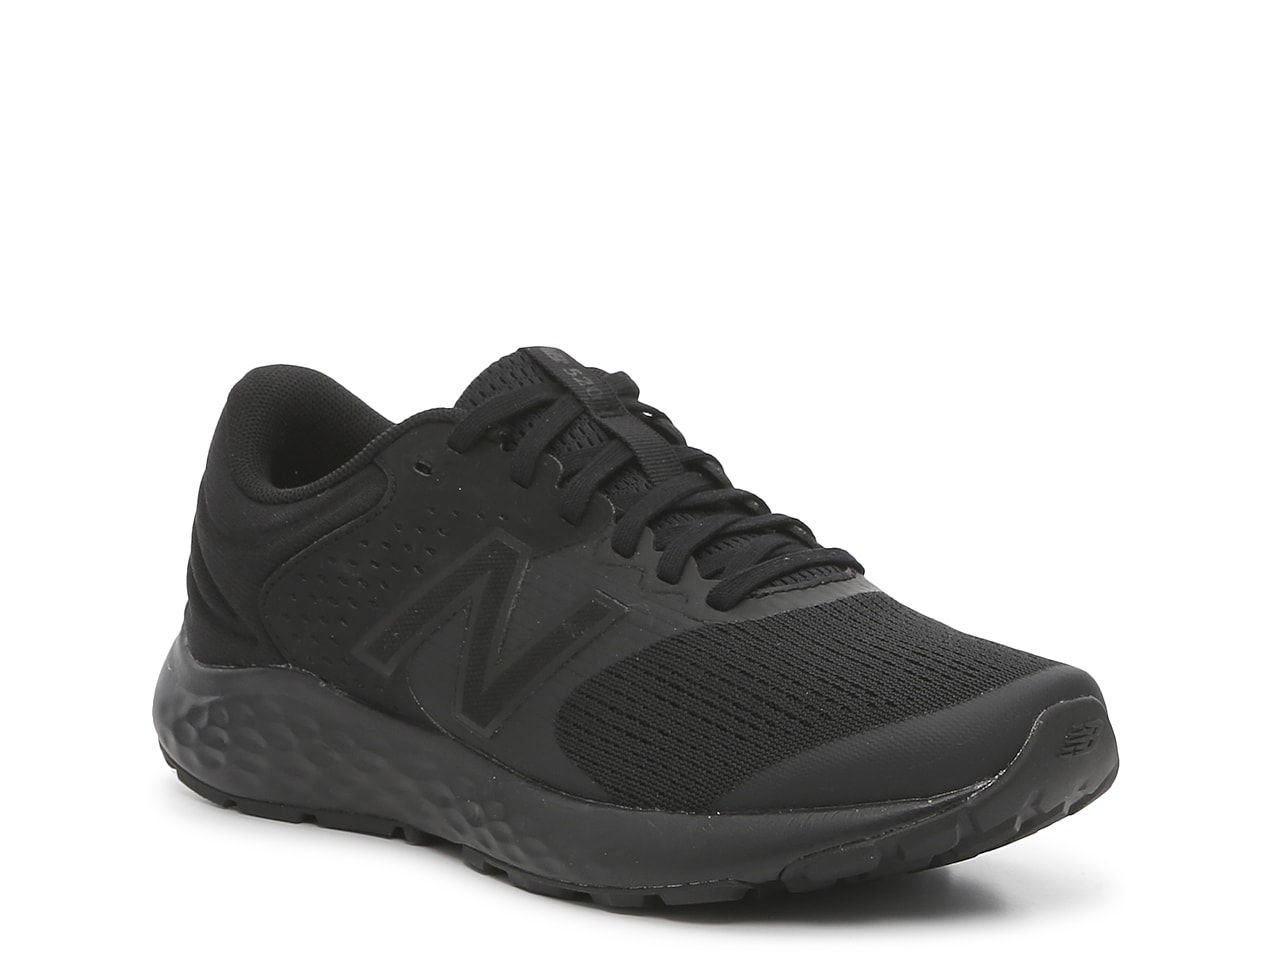 New Balance 520 v7 Running Shoe - Women's